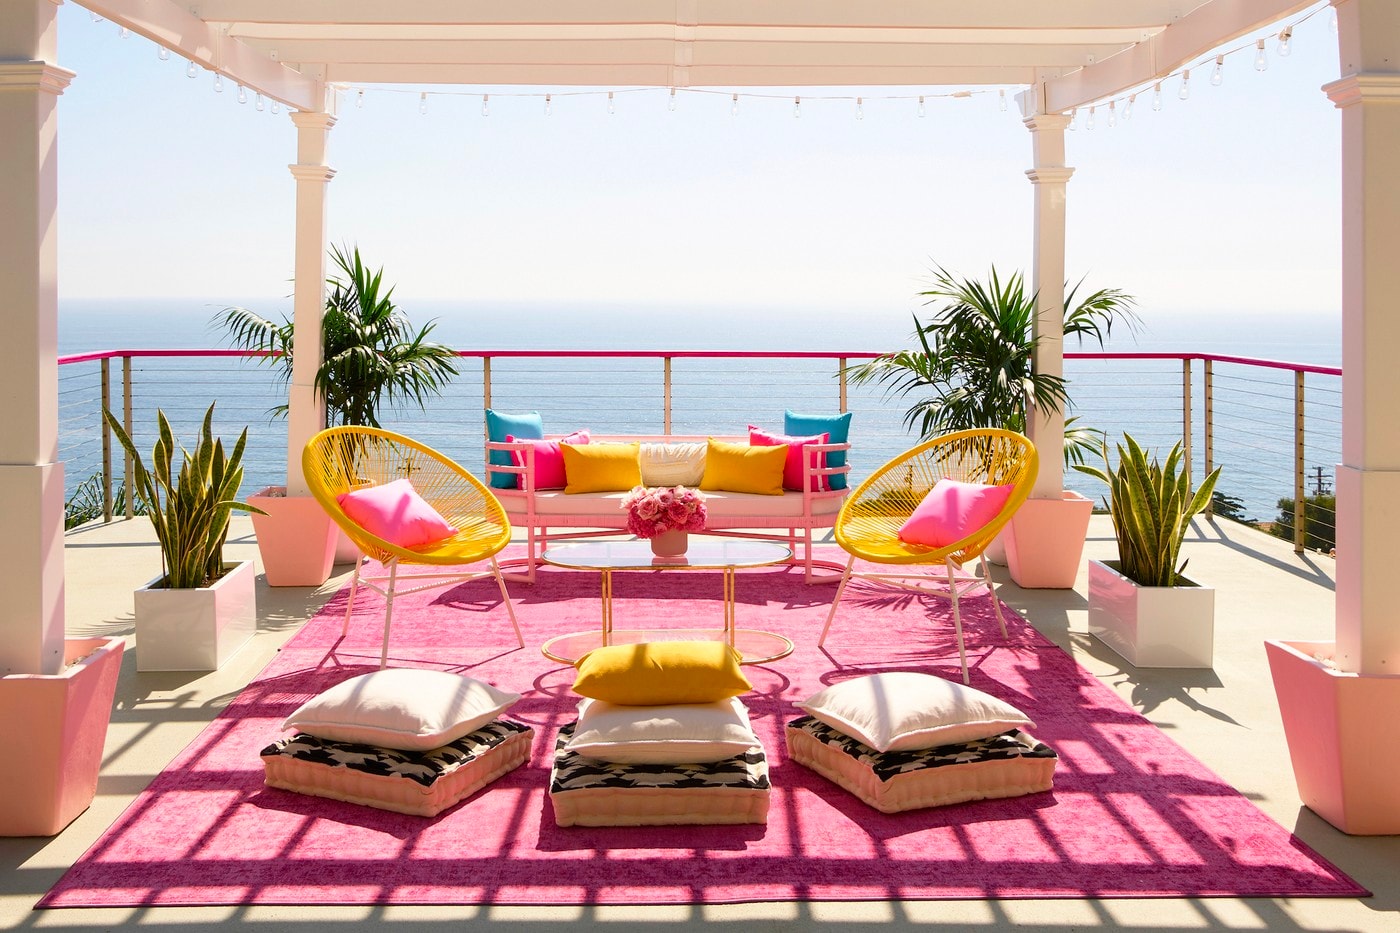 Airbnb Barbie Malibu Dreamhouse News homes rentals travel Malibu toys dolls luxury homes pools summer party getaways 